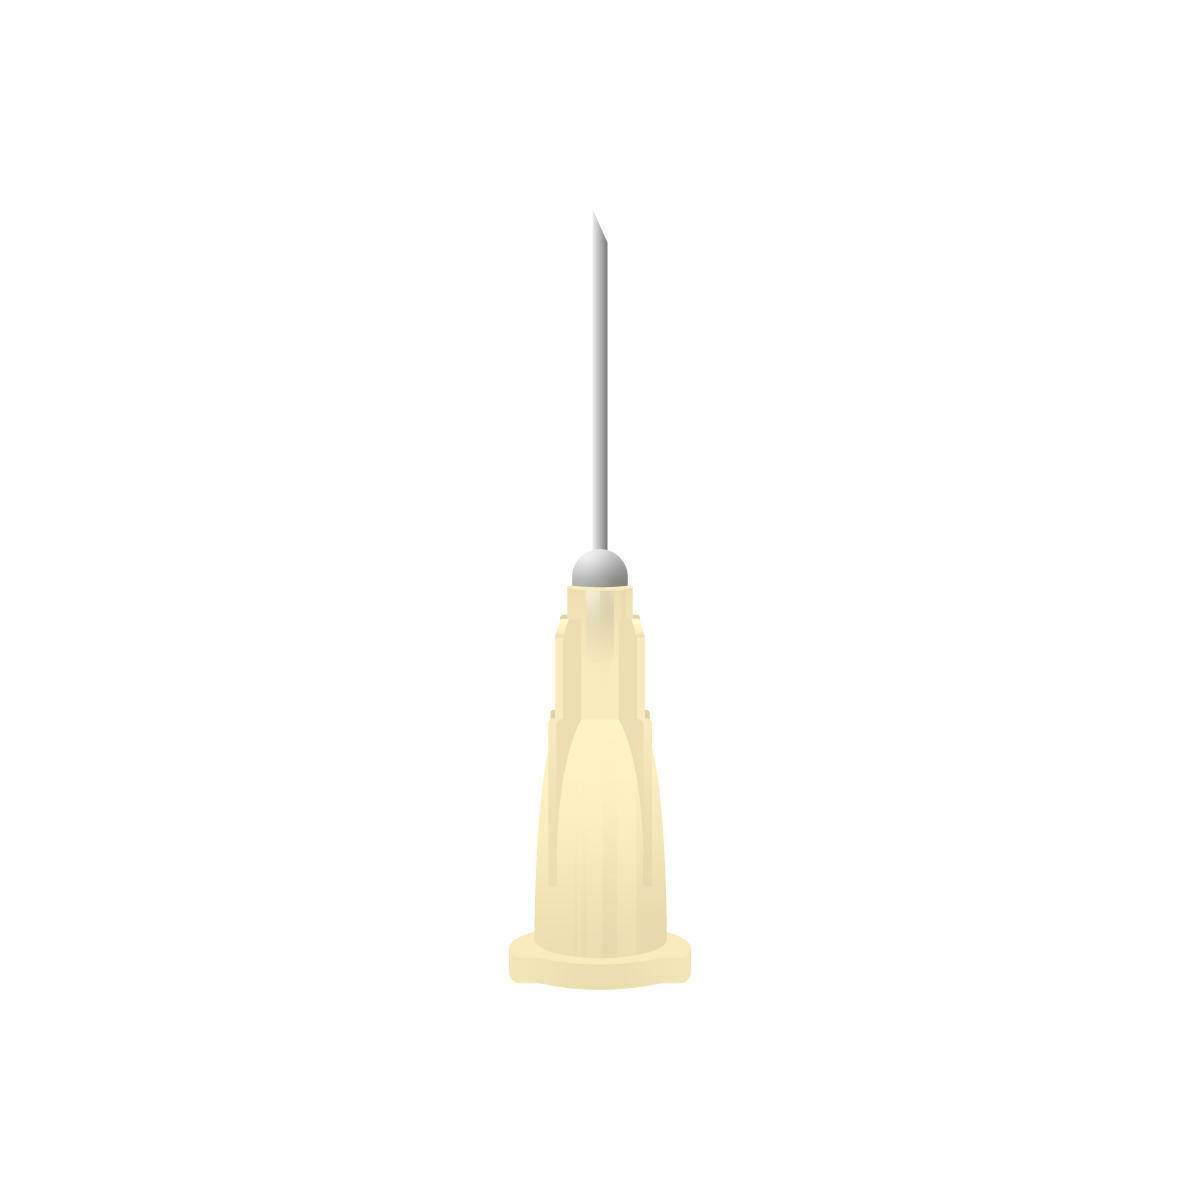 21g 5/8 inch Agriject Disposable Needles Poly Hub - UKMEDI